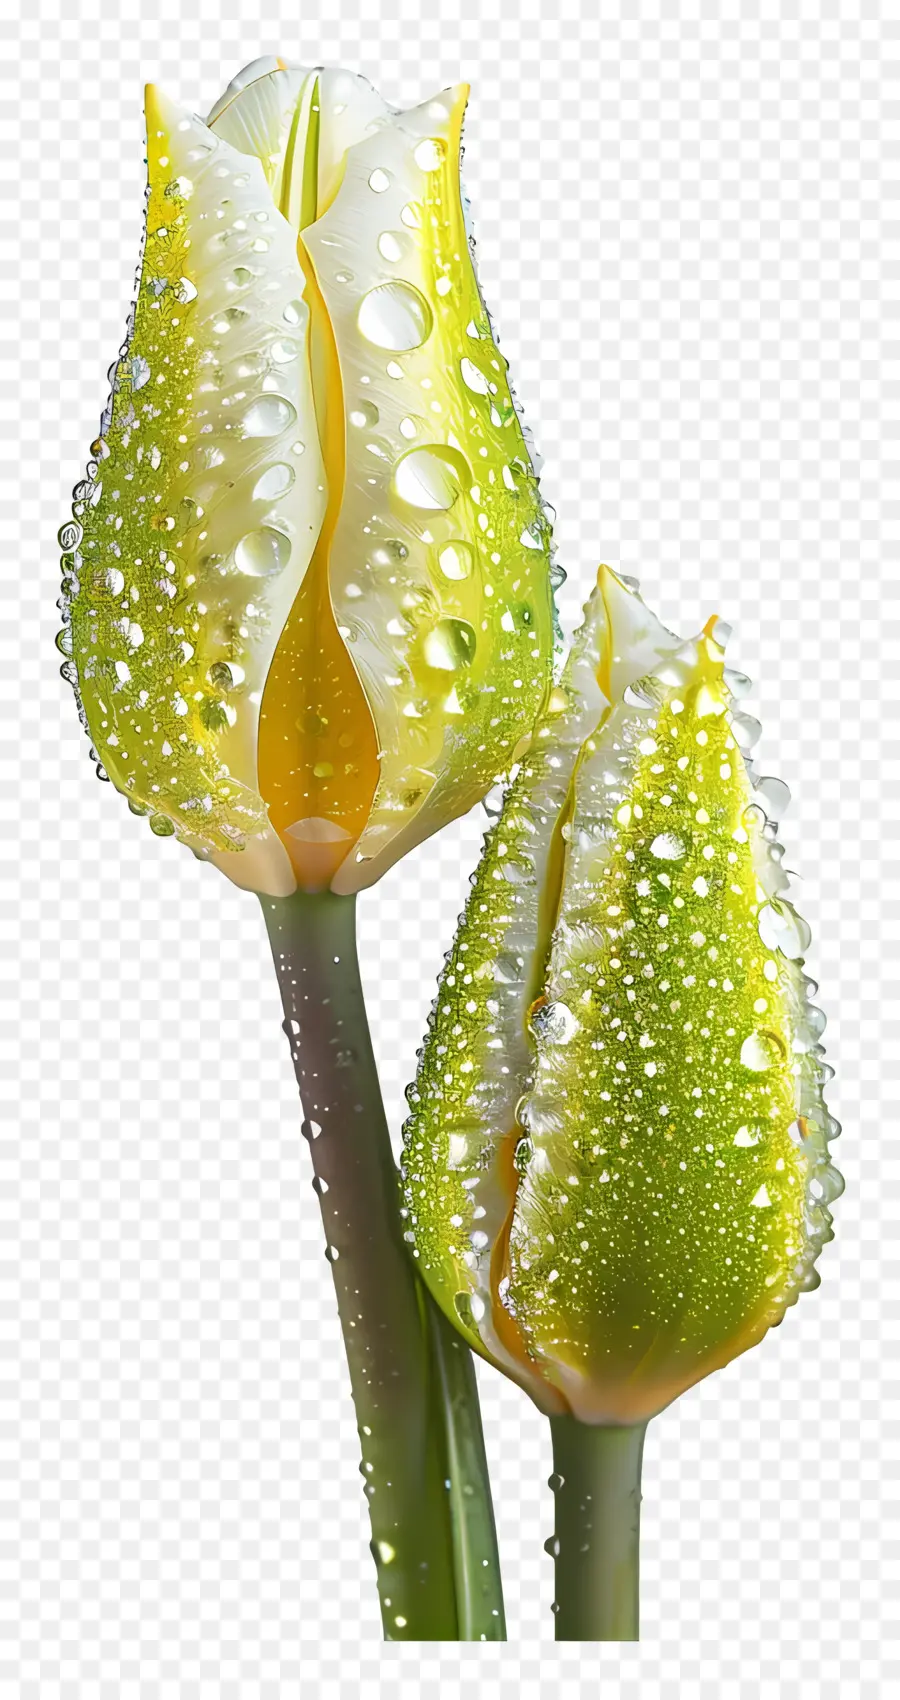 gocce d'acqua - Due tulipani gialli con gocce d'acqua